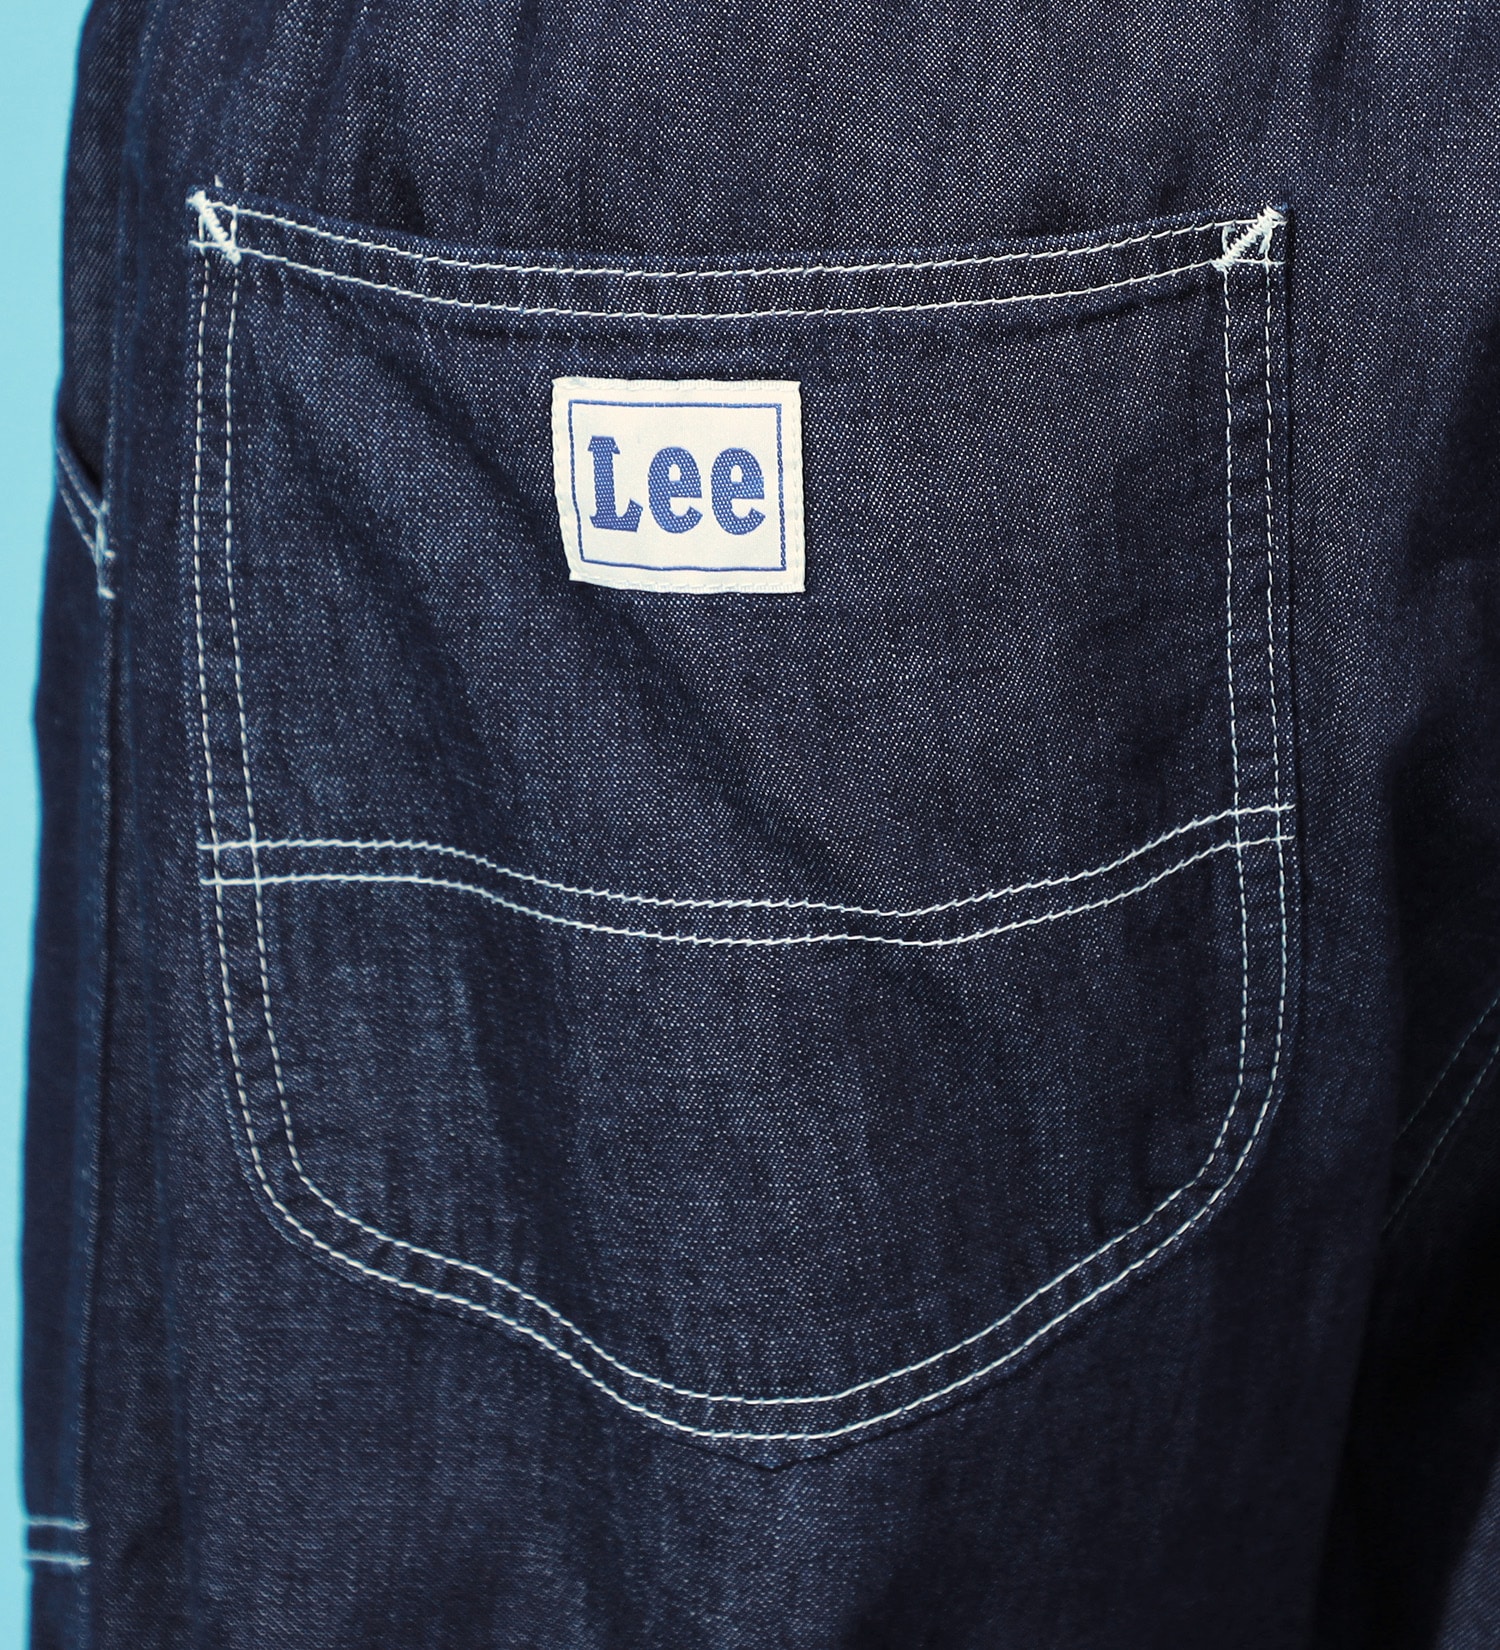 Lee(リー)の【試着対象】【涼】【BIG SIZE 2L-4L】快適素材 ベーカーイージーパンツ COOL|パンツ/デニムパンツ/メンズ|インディゴブルー